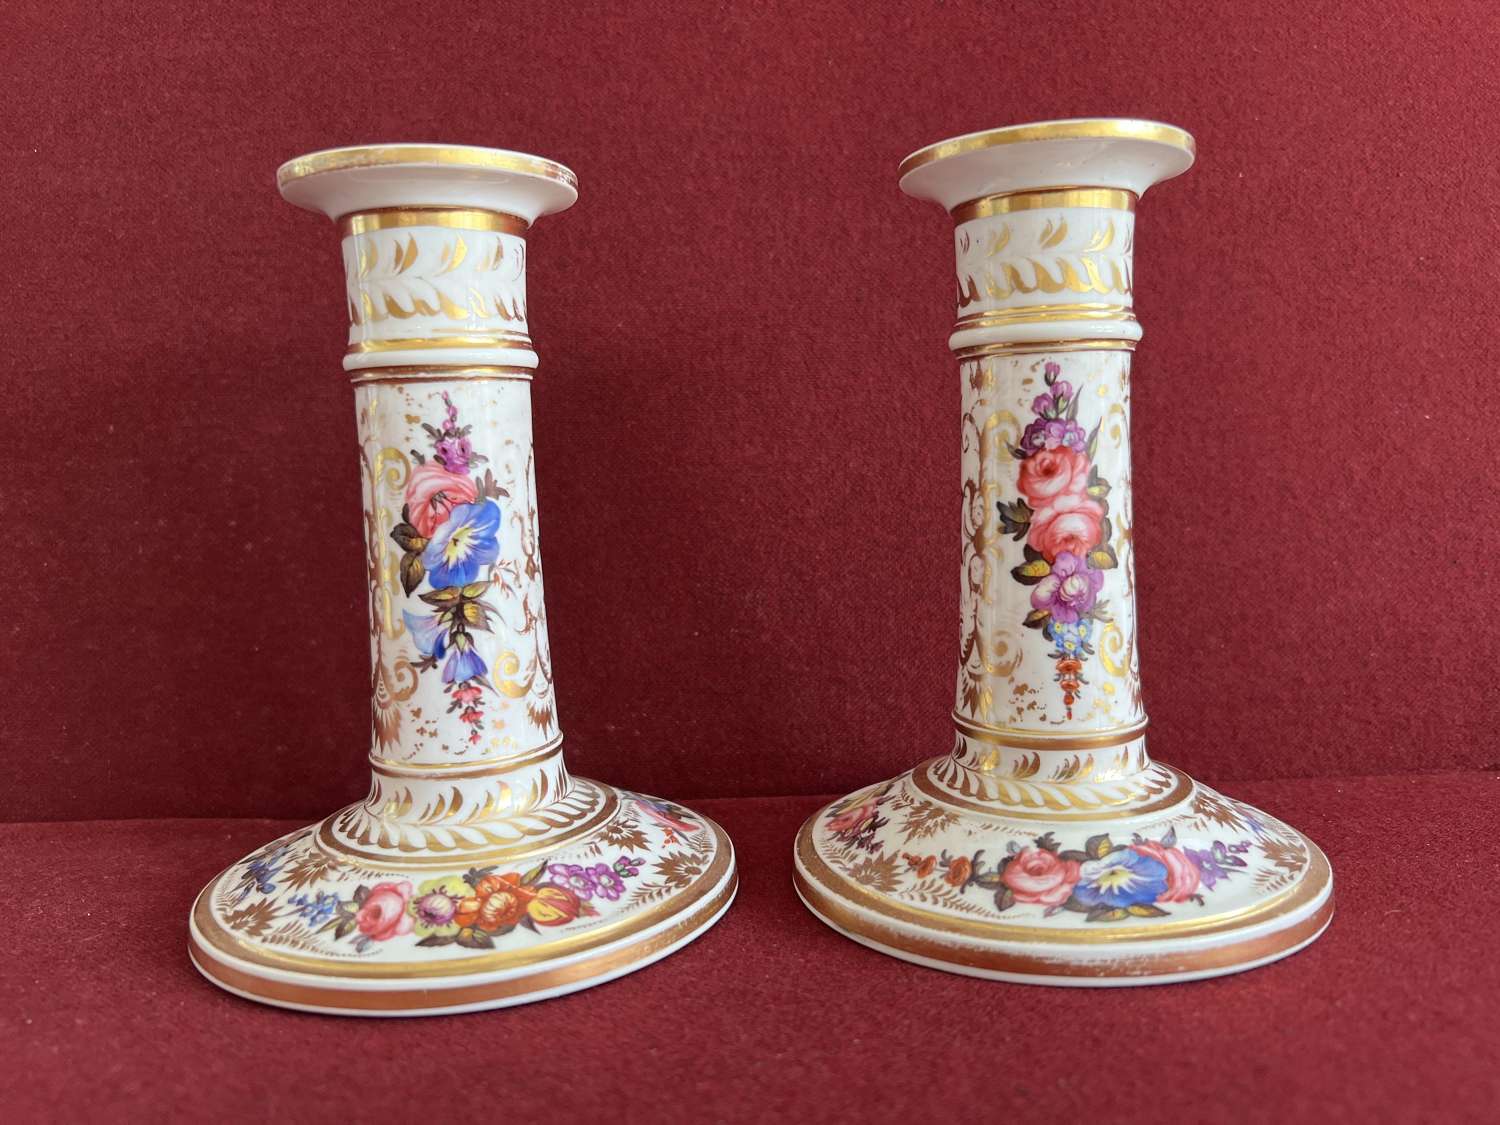 A pair of Derby porcelain Candlesticks c.1815-25